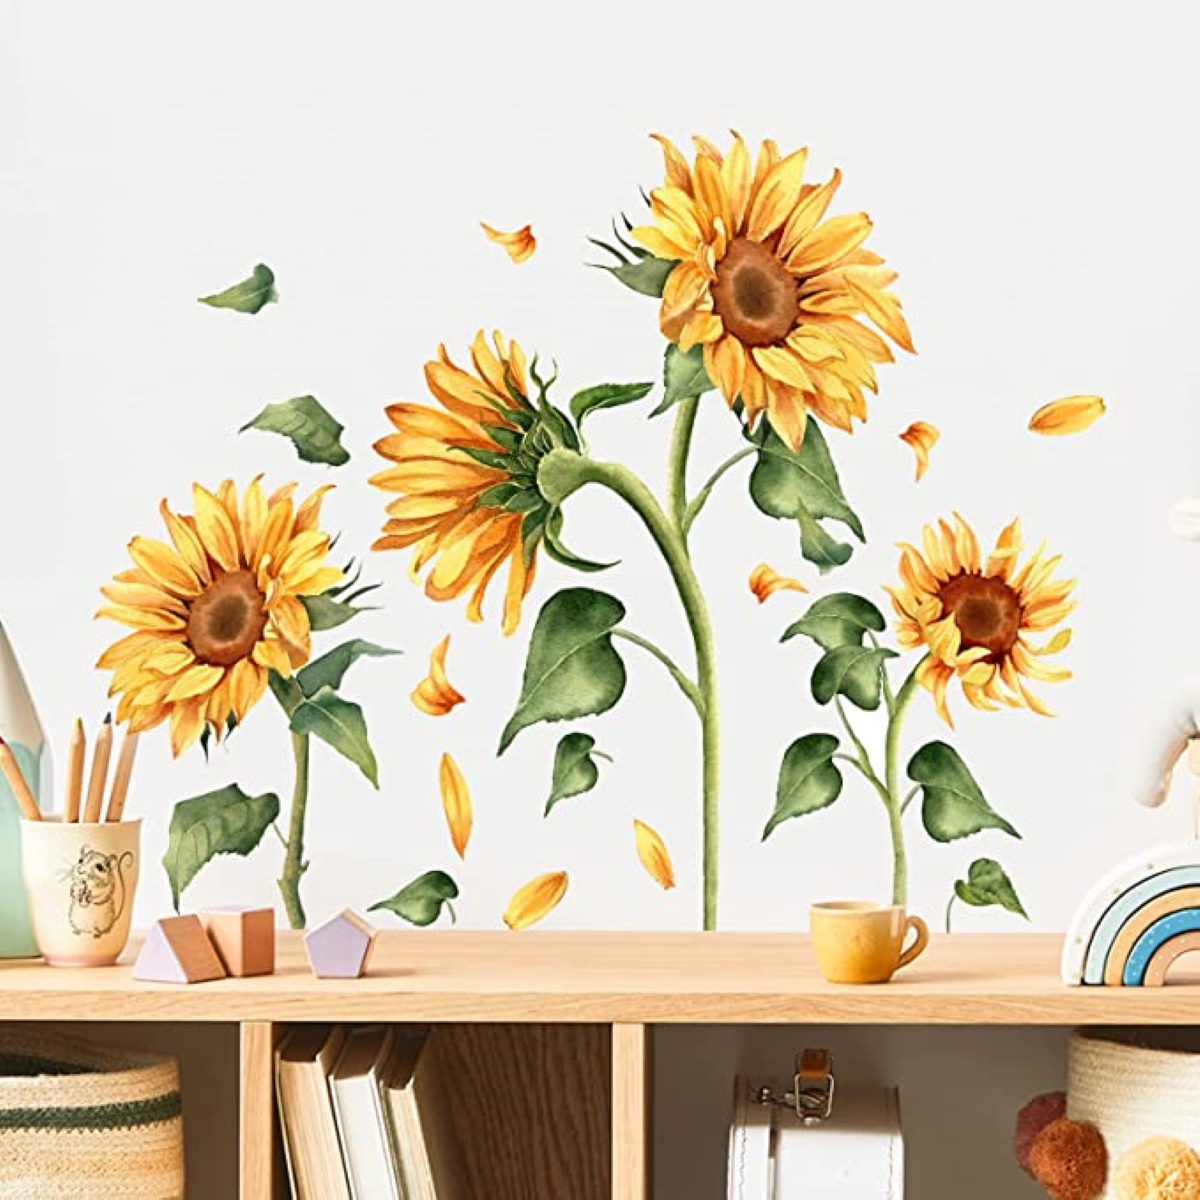 apartment decor ideas - sunflower wall decal